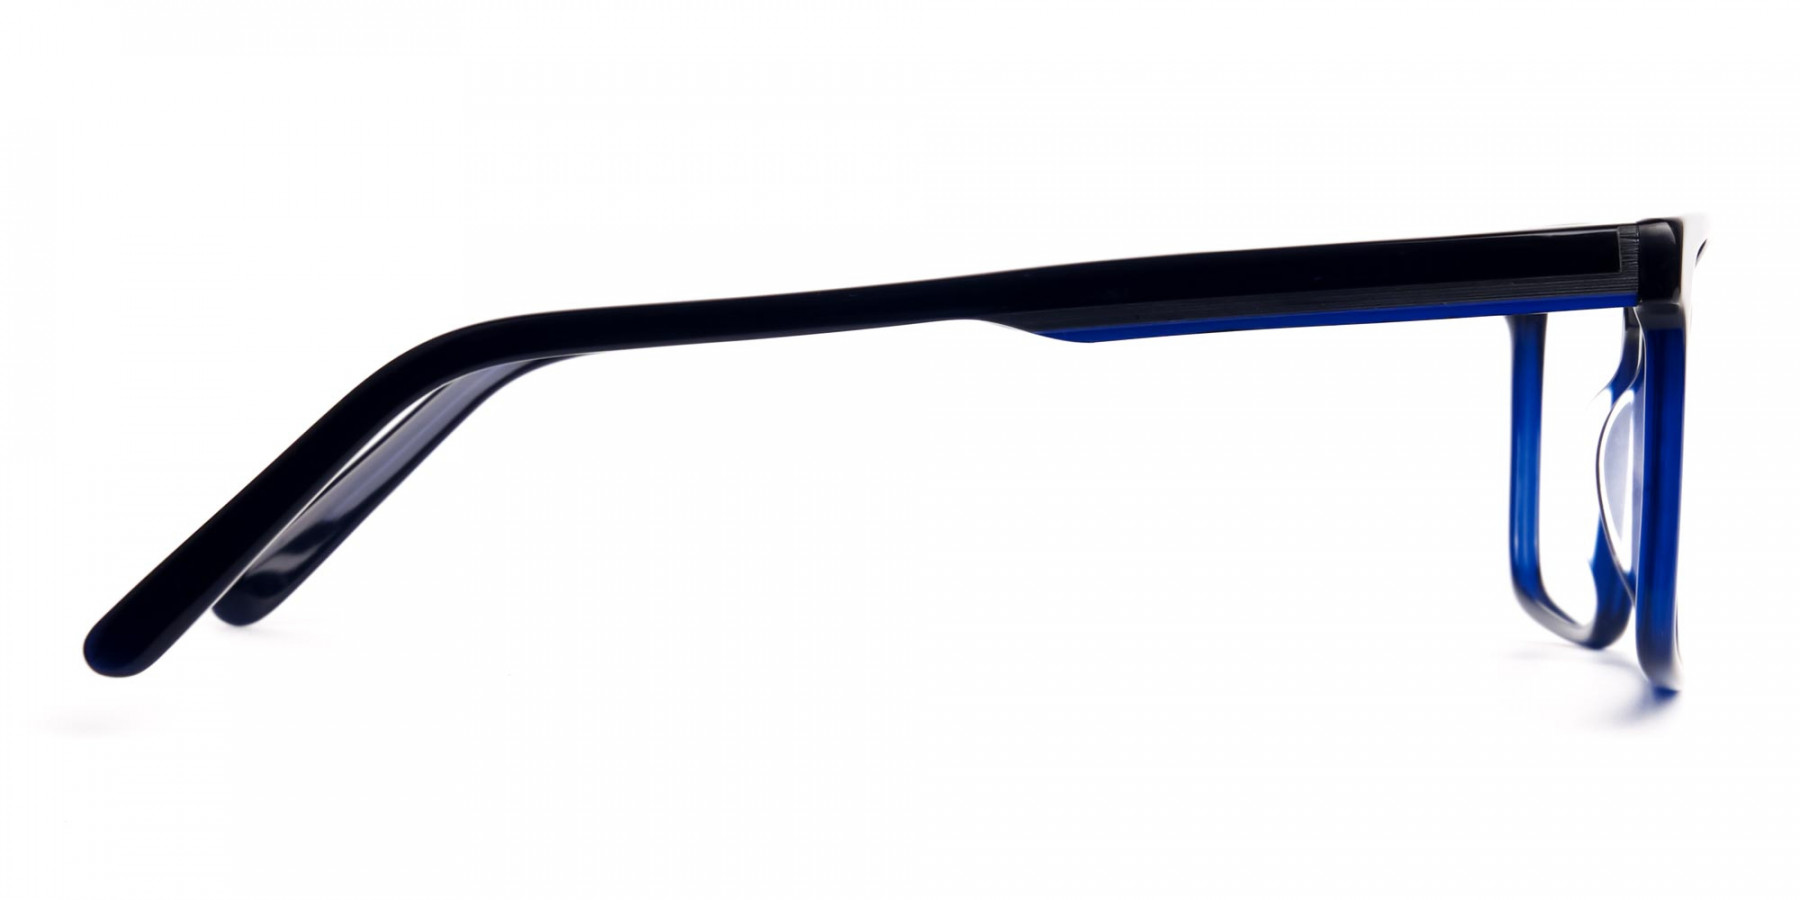 Black-and-Indigo-Blue-Rectangular-Glasses-frames-1